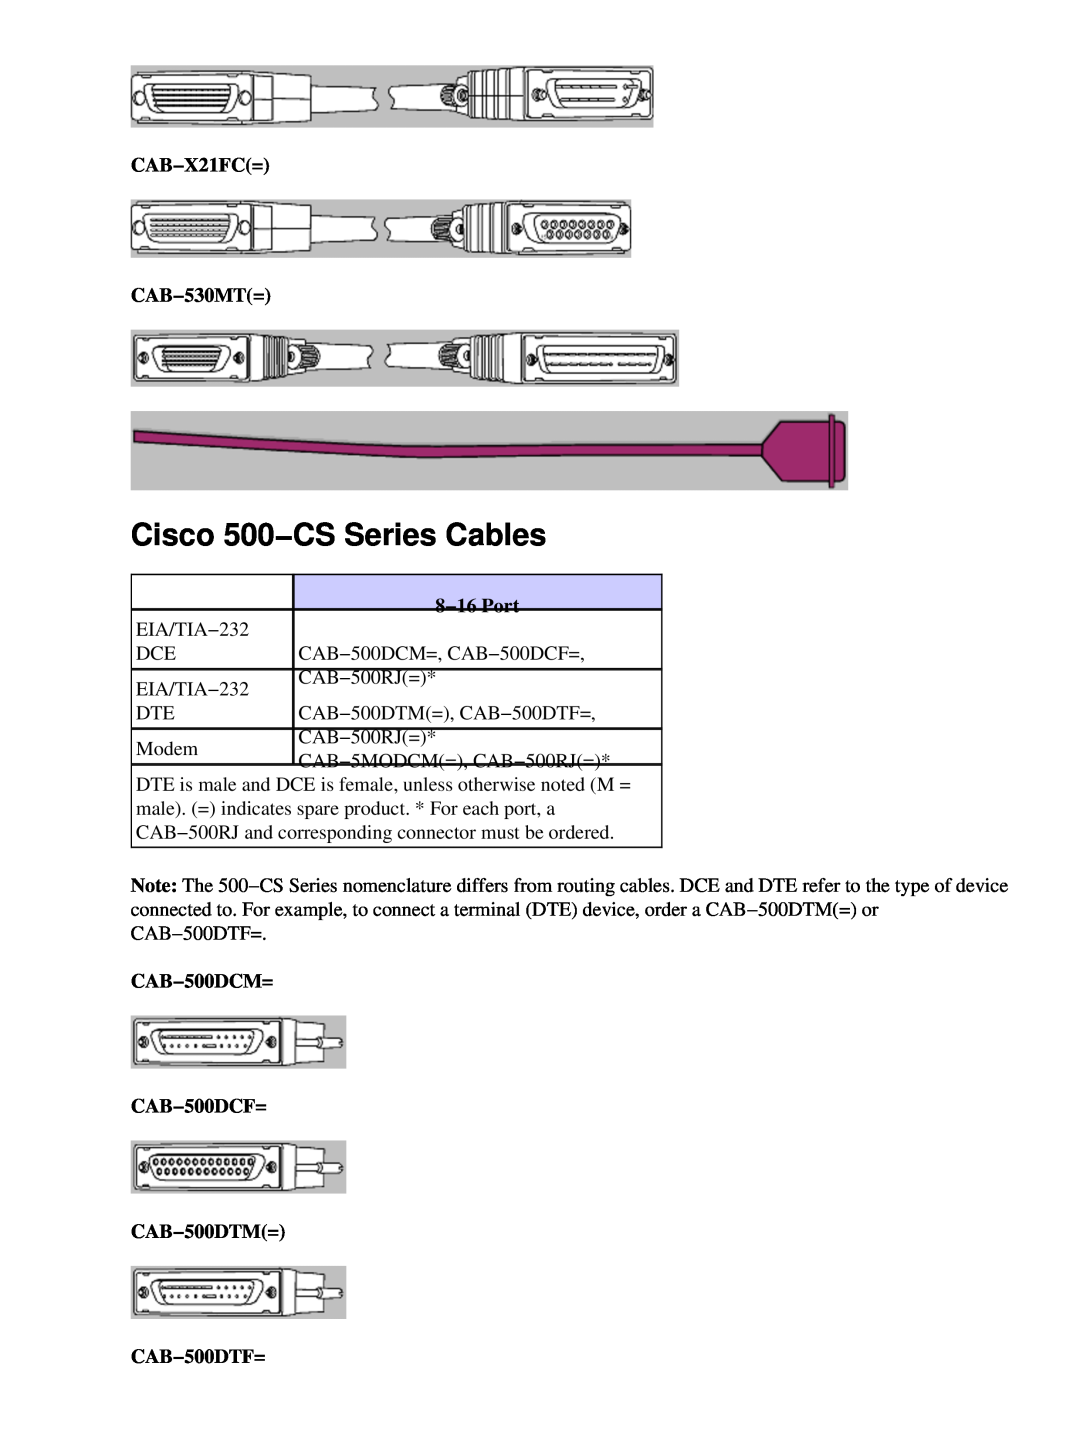 Cisco Systems 2500 Series, 3000 Series manual Cisco 500−CS Series Cables, CAB−X21FC= CAB−530MT=, 8−16 Port, CAB−500DTF= 